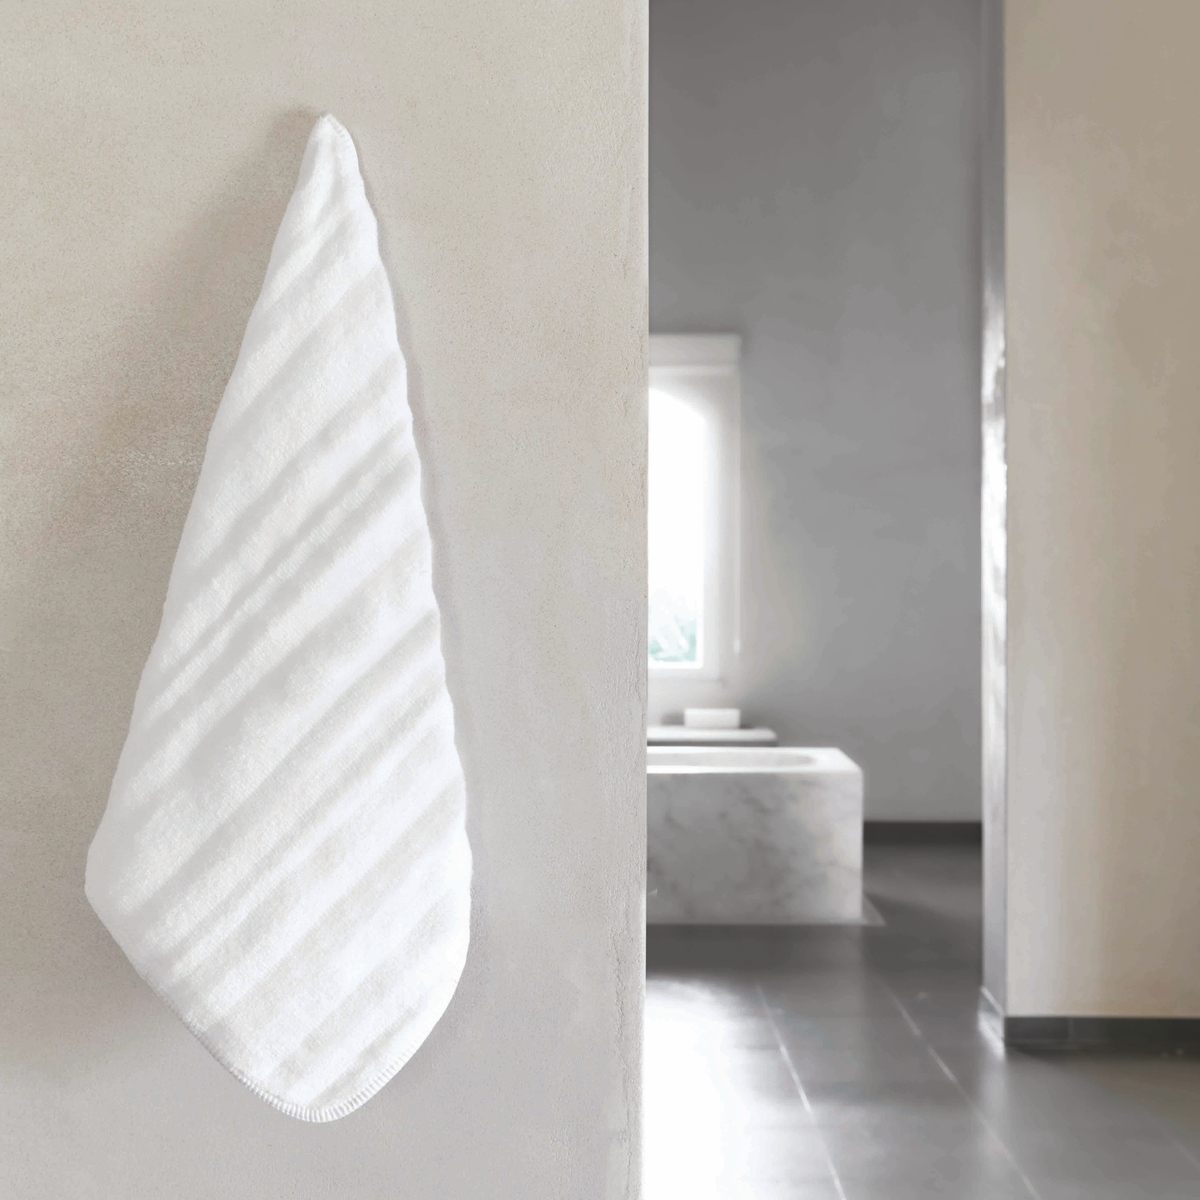 White Graccioza Alentejo Bath Towel Hangging on a Wall